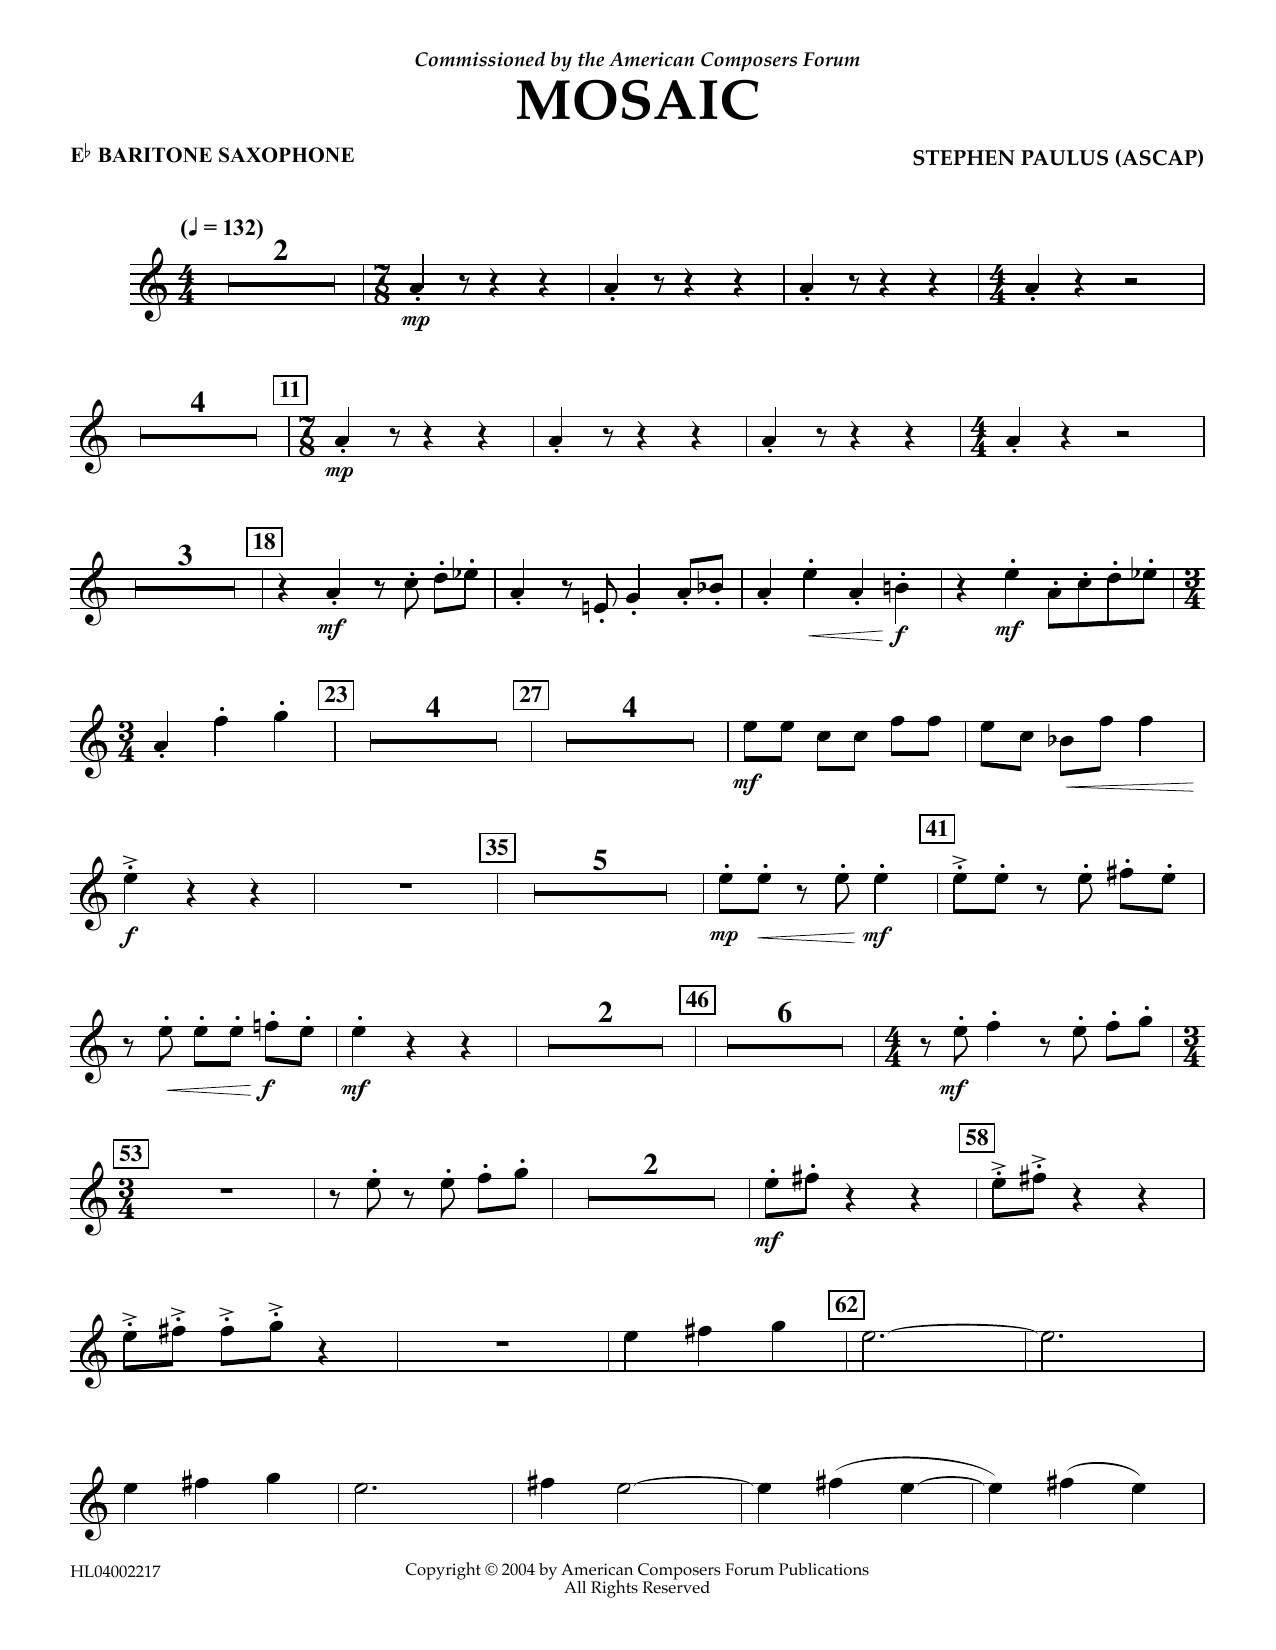 Stephen Paulus Mosaic - Eb Baritone Saxophone Sheet Music Notes & Chords for Concert Band - Download or Print PDF